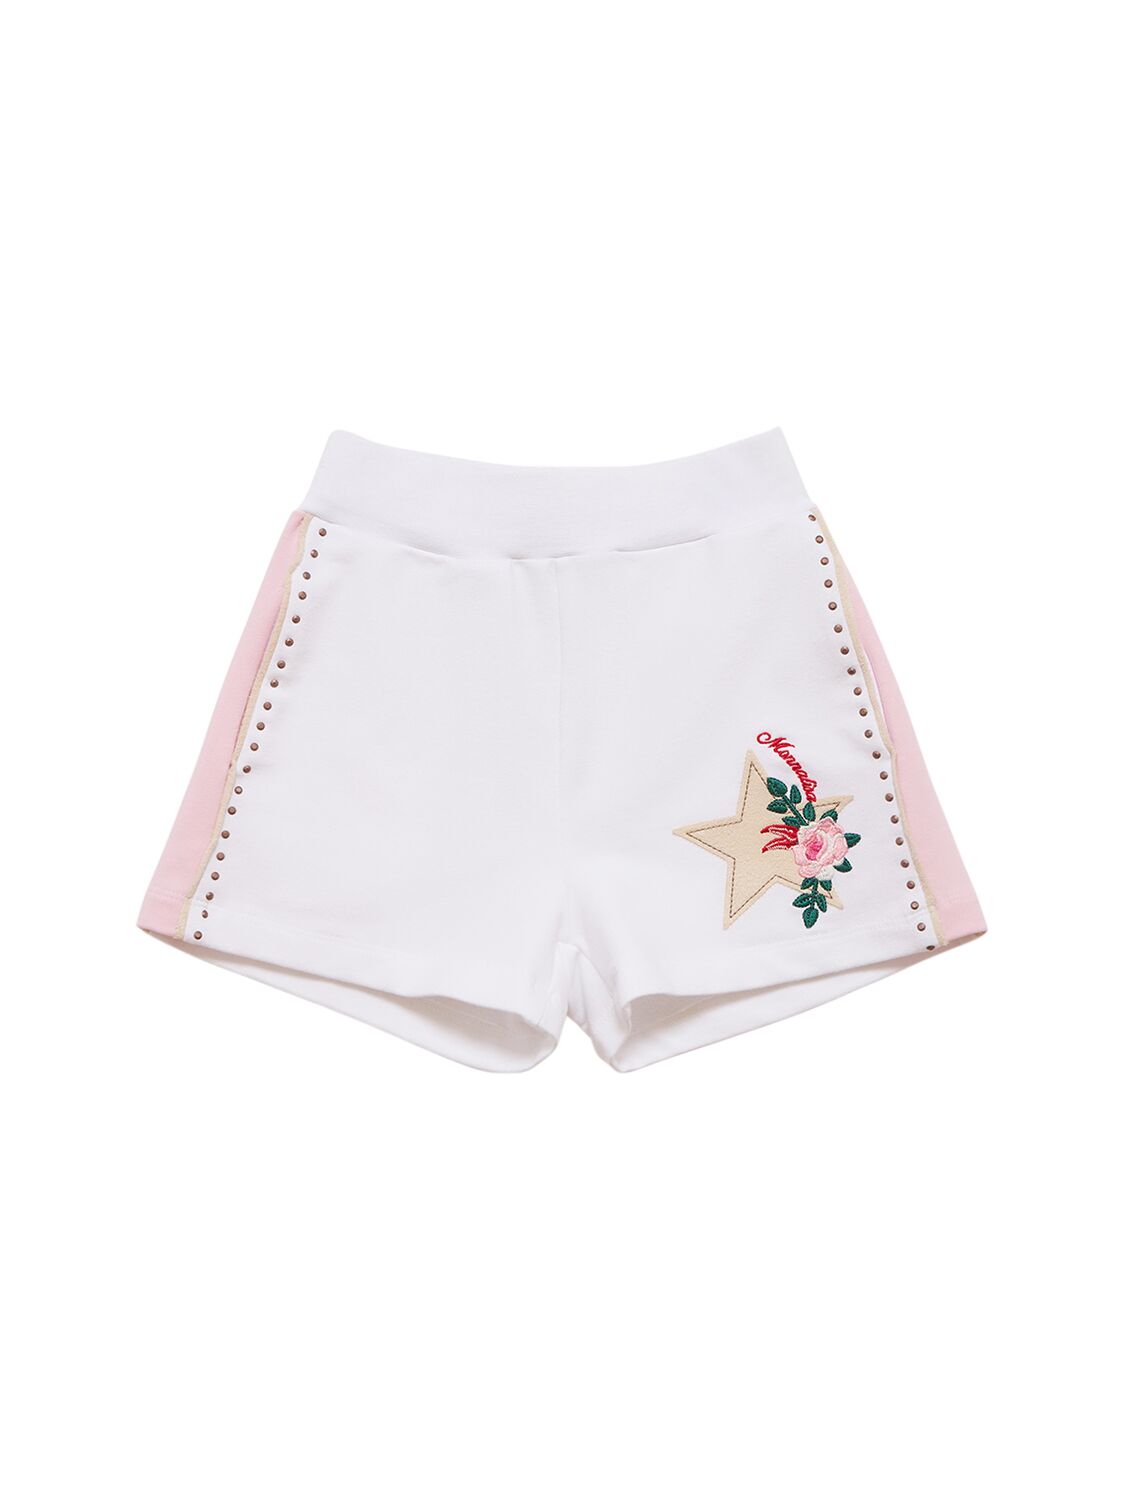 Monnalisa Kids' Cotton Blend Sweat Shorts In White